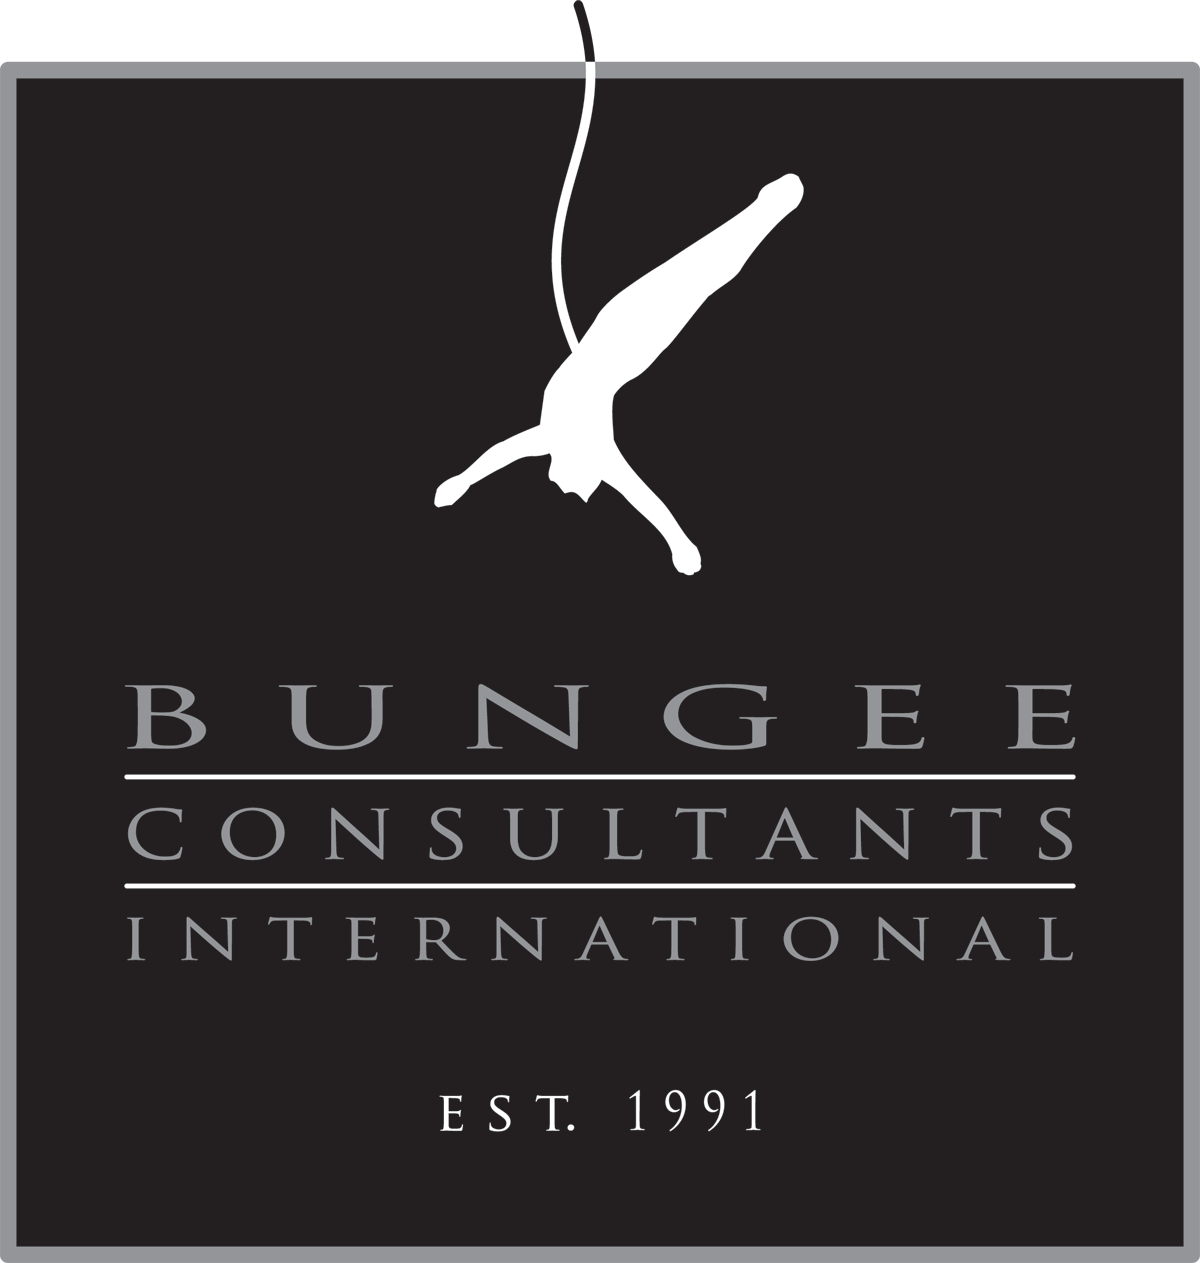 Bungee Consultants International